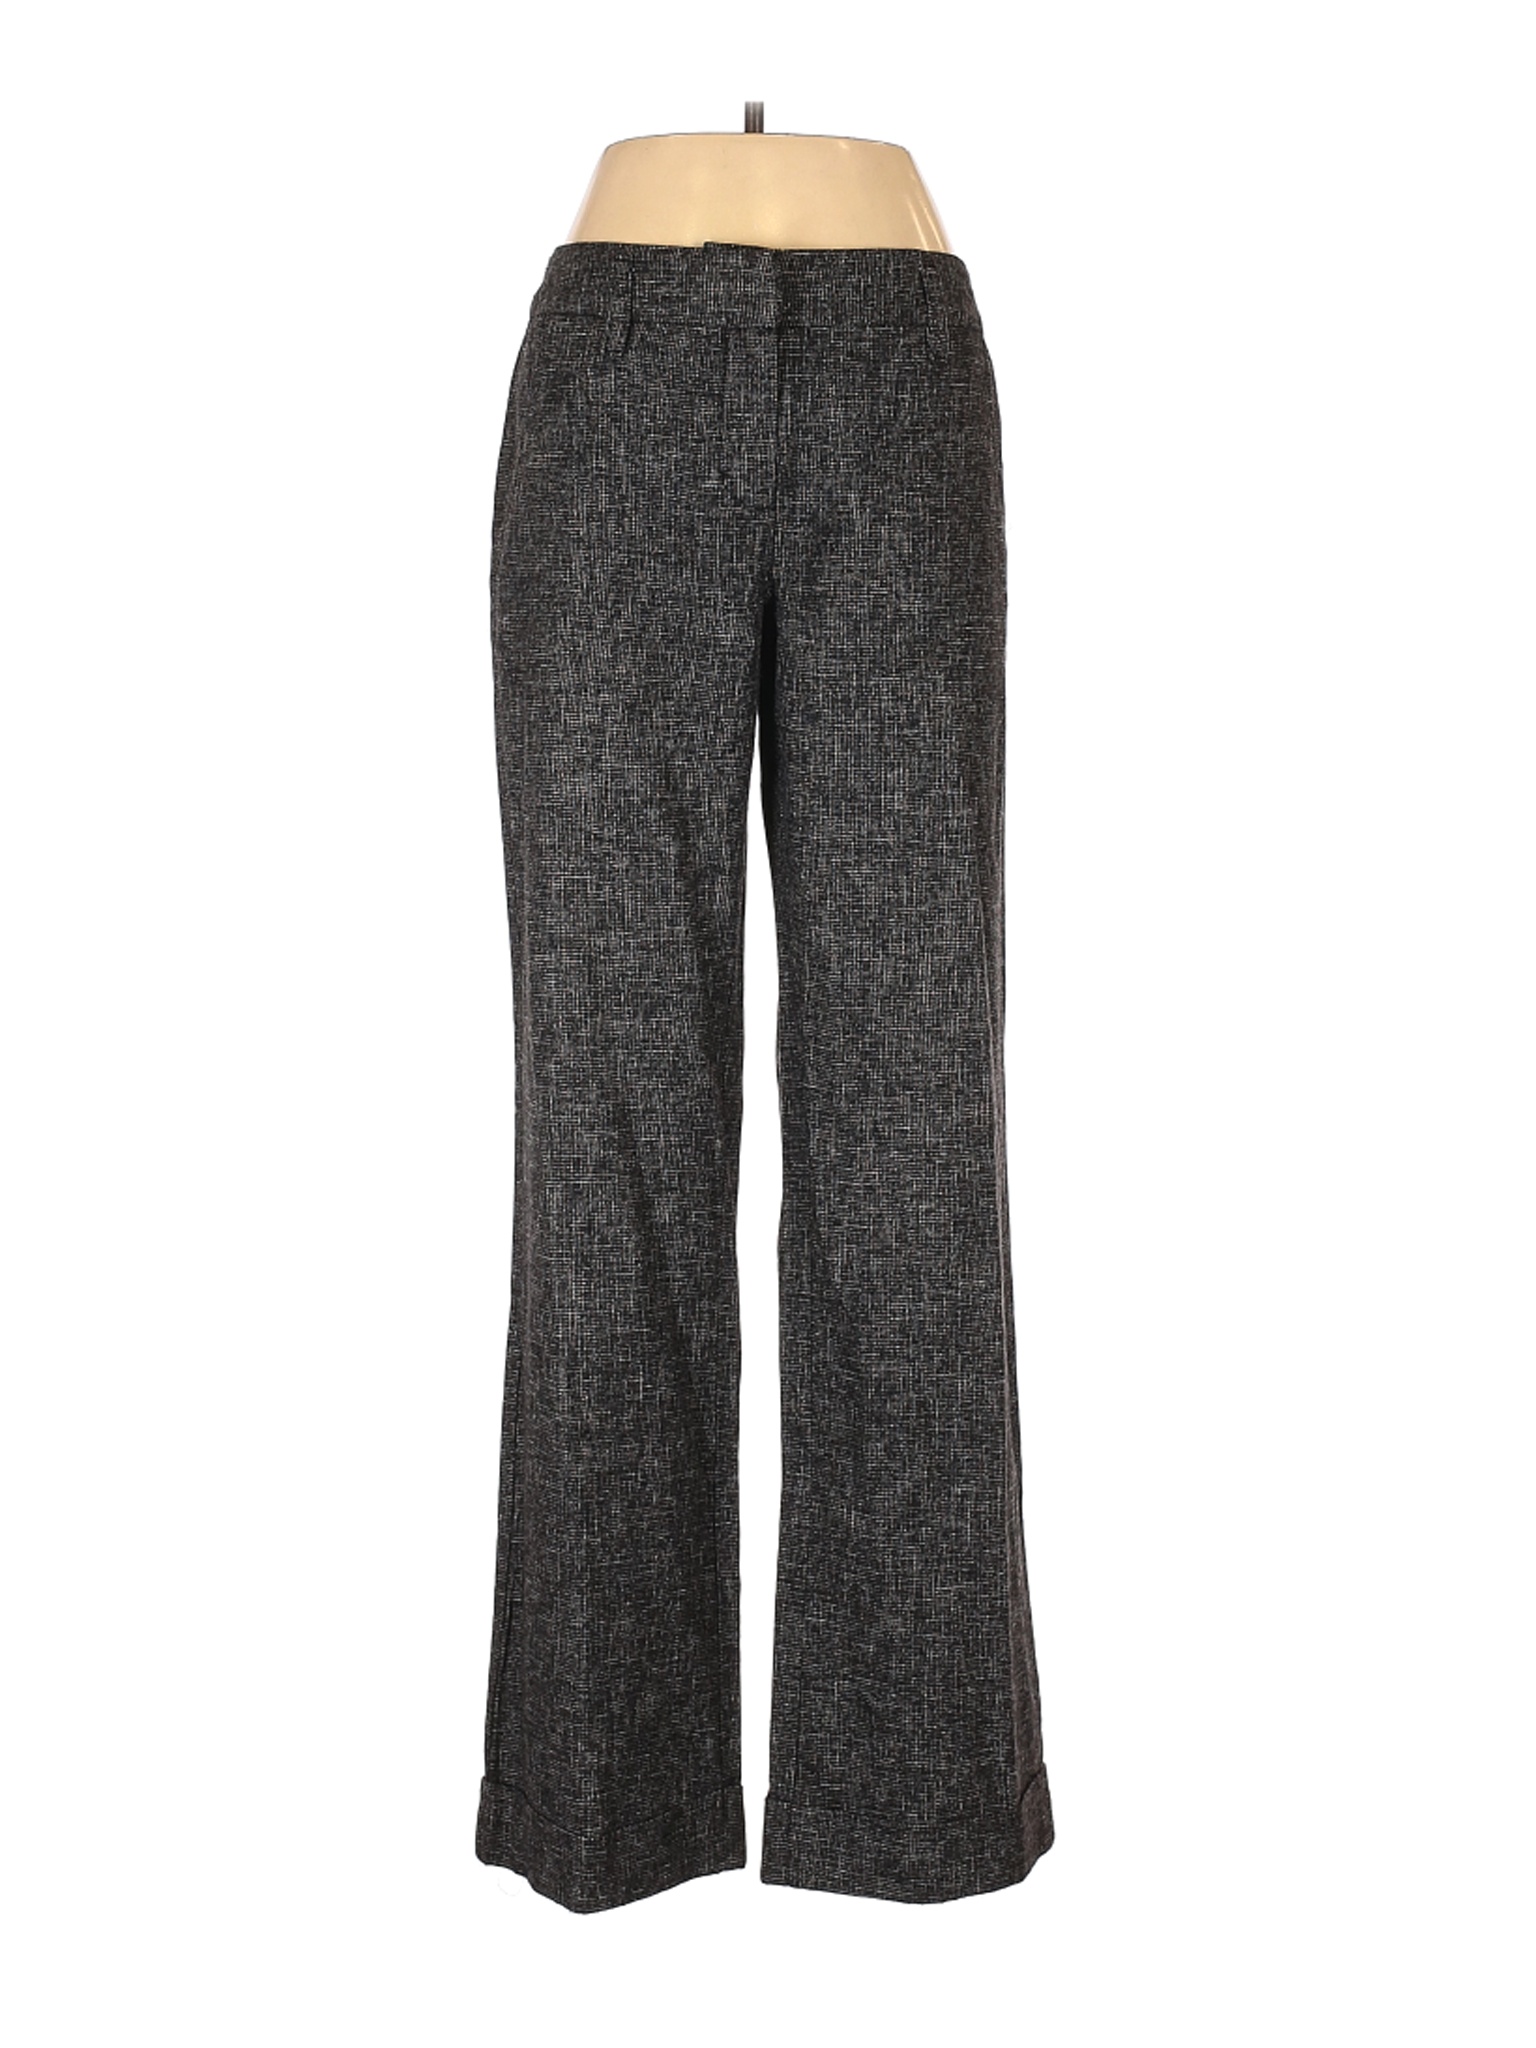 Talbots Women Gray Casual Pants 4 | eBay